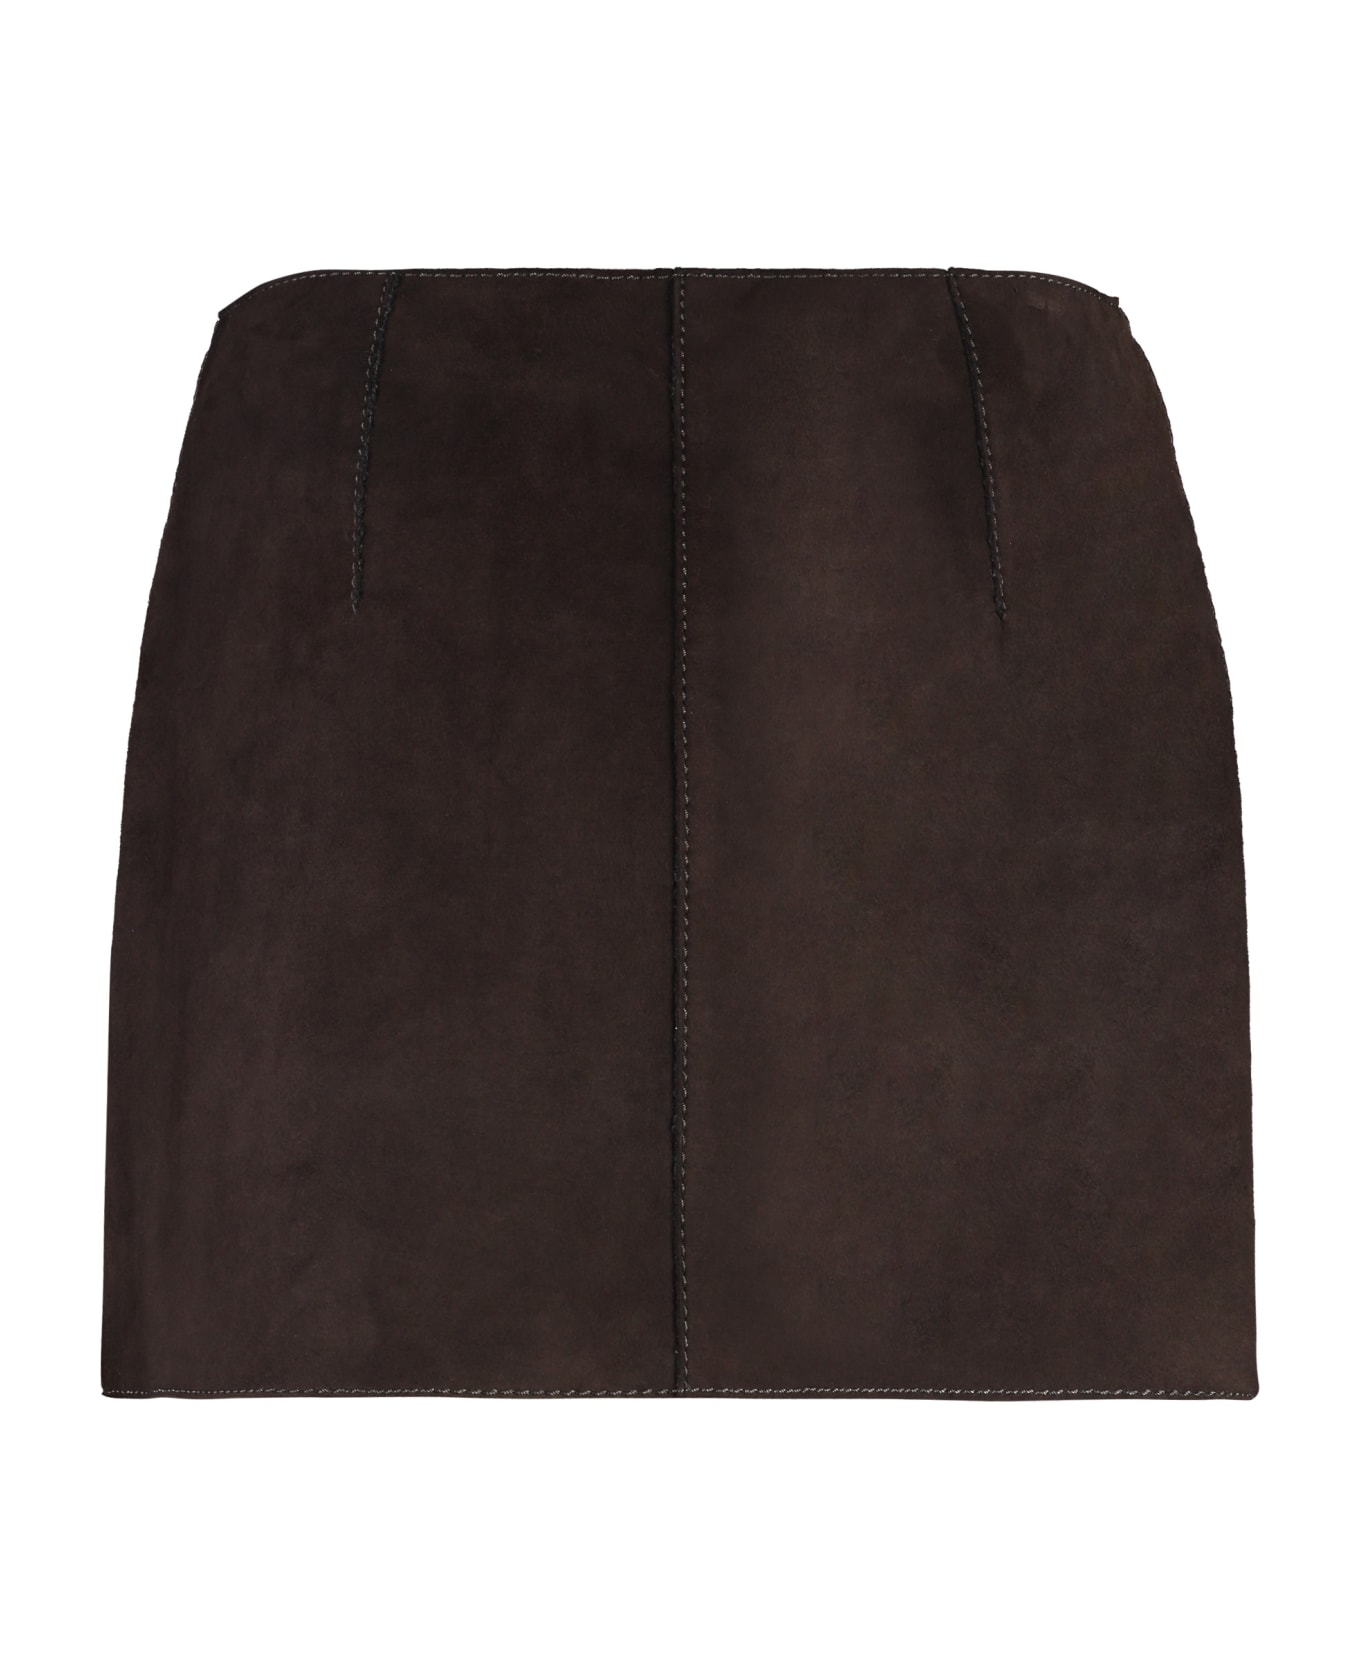 Parosh Monet Miniskirt - brown